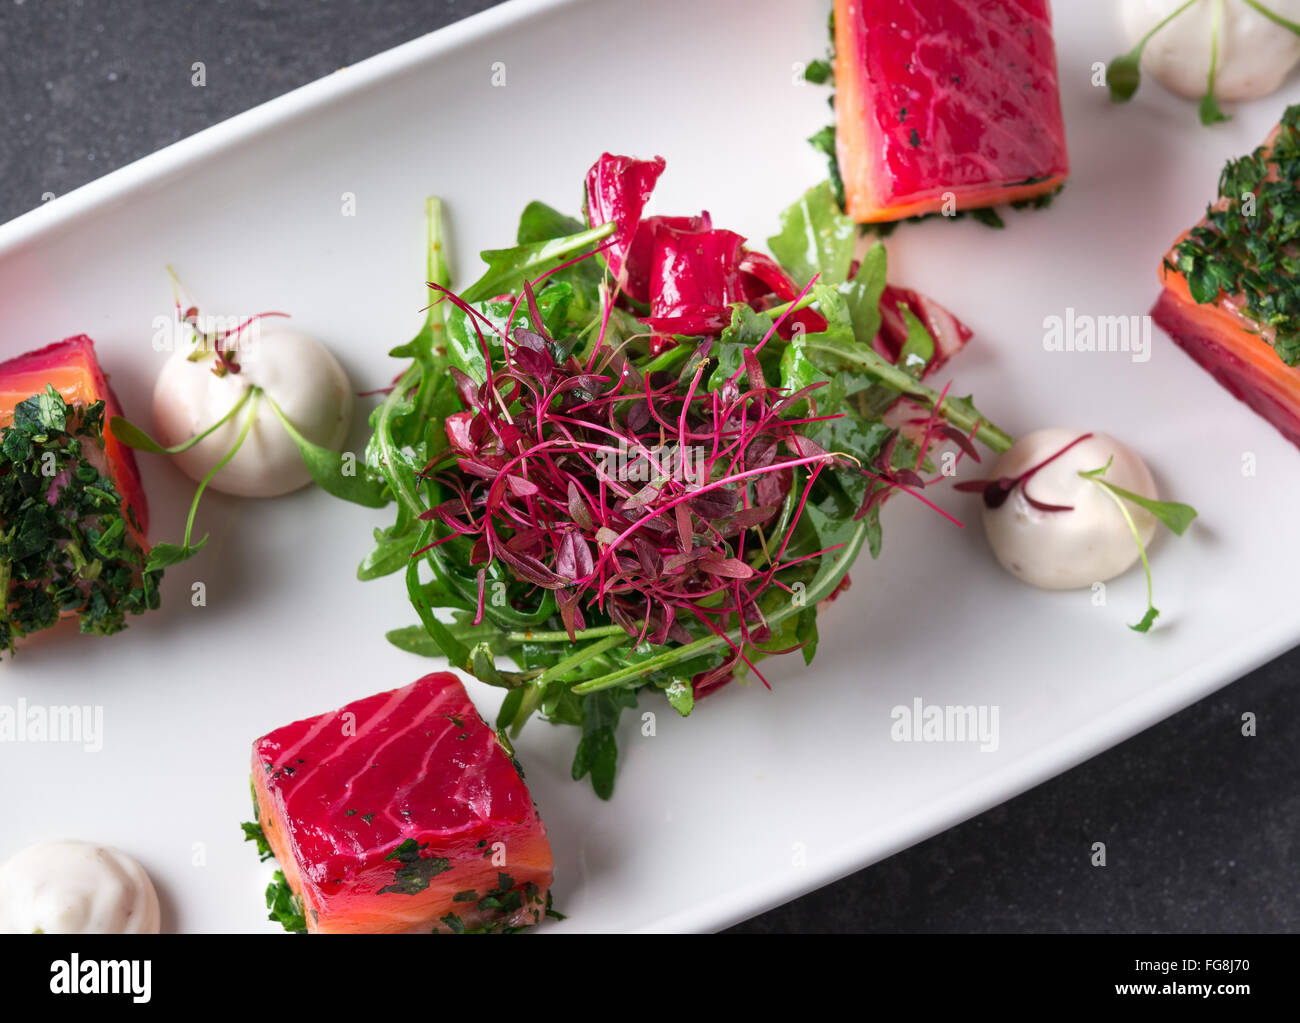 Cuisine starters Stock Photo